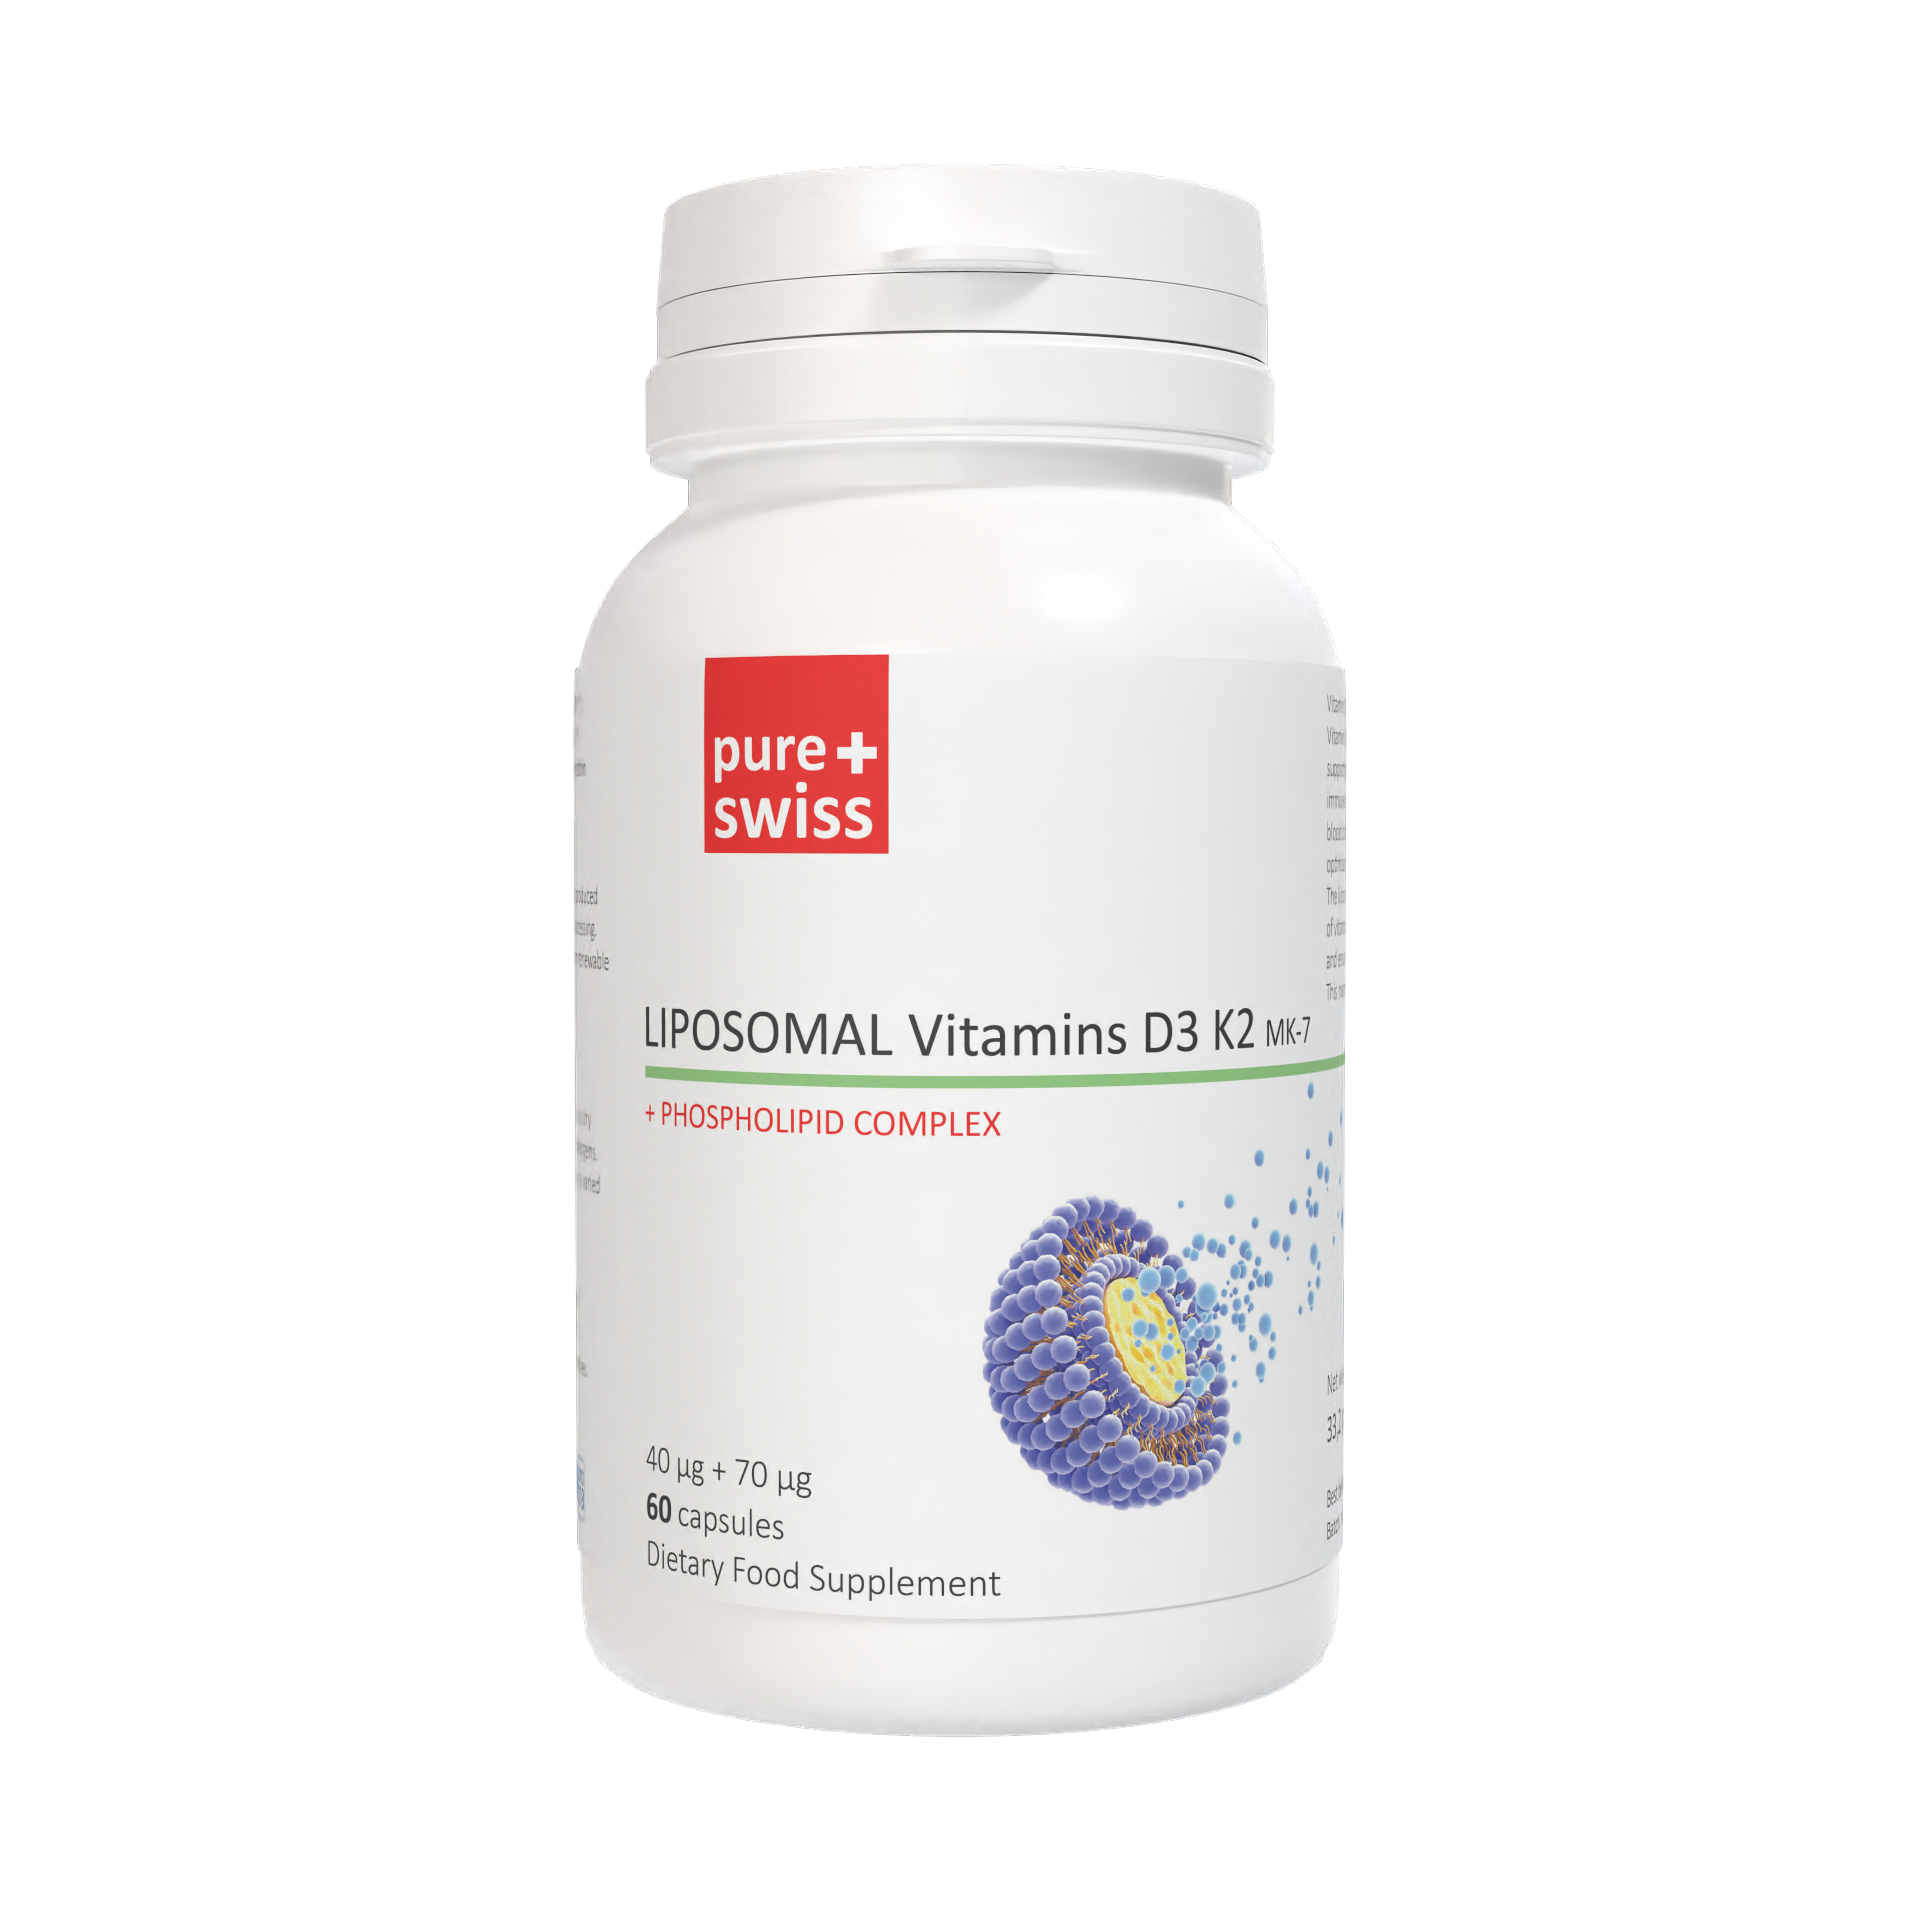 LIPOSOMAL Vitamins D3 K2 MK-7